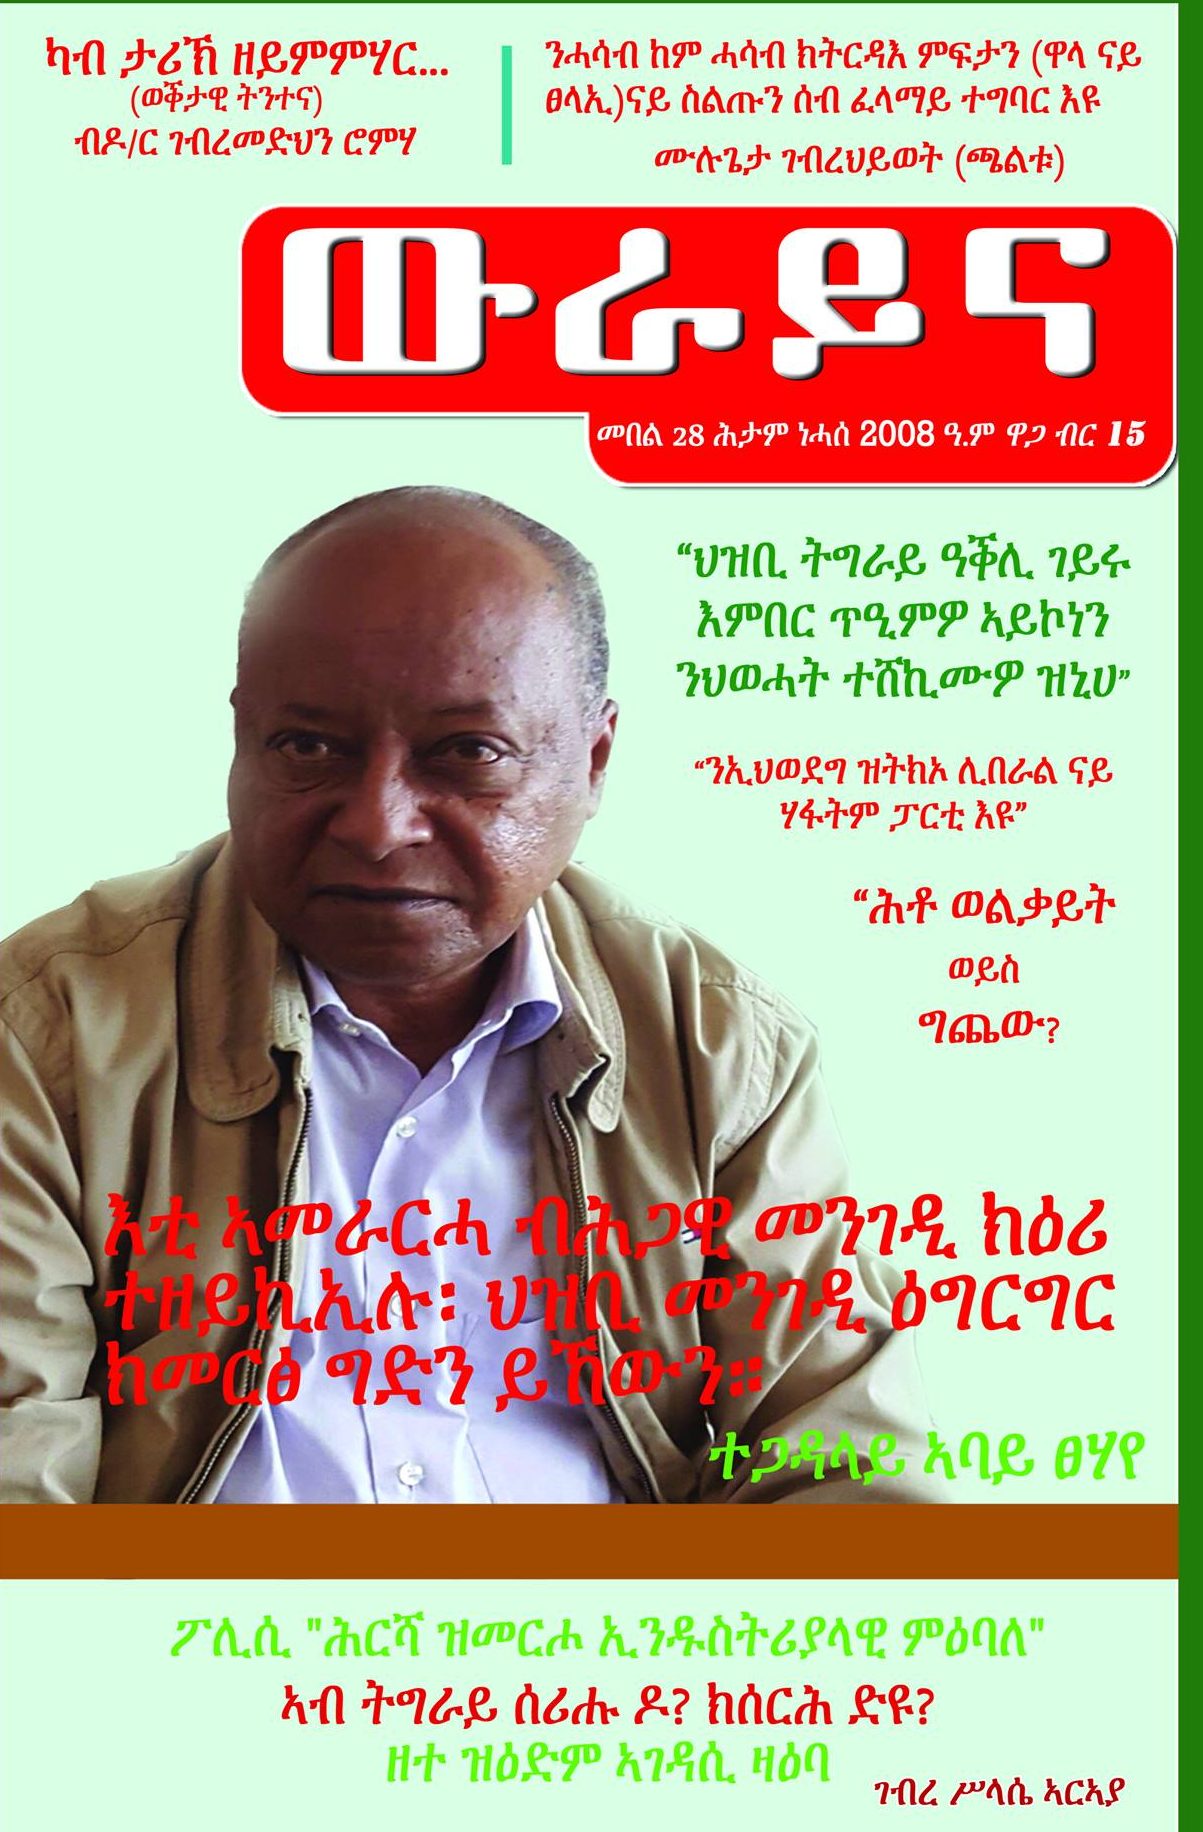 Image - Wurayna magazine, Abay Tsehaye